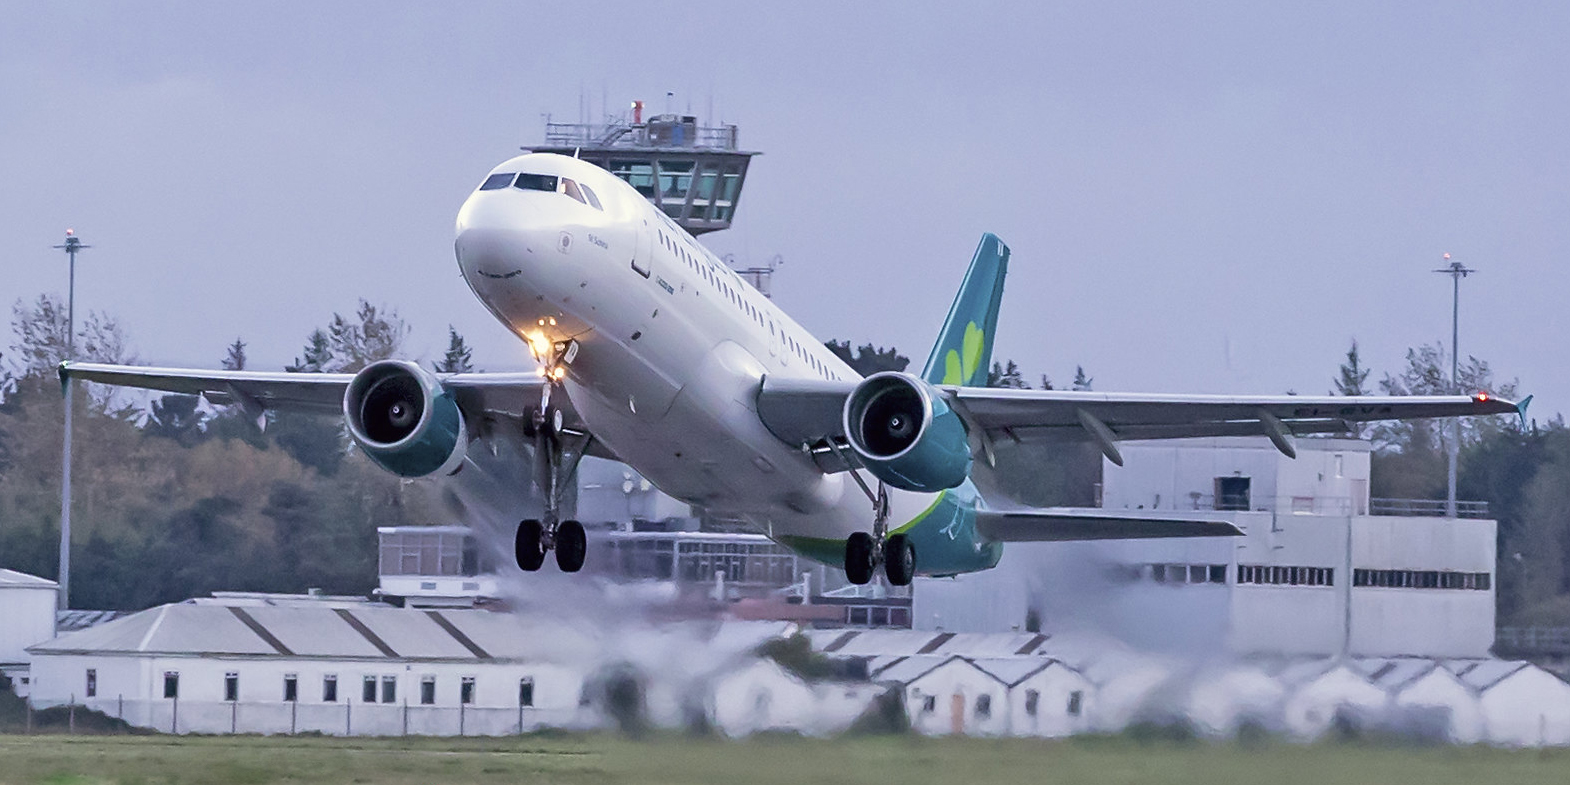 Aer Lingus: Image c/o Paul Nelhams Anhedral A320-200